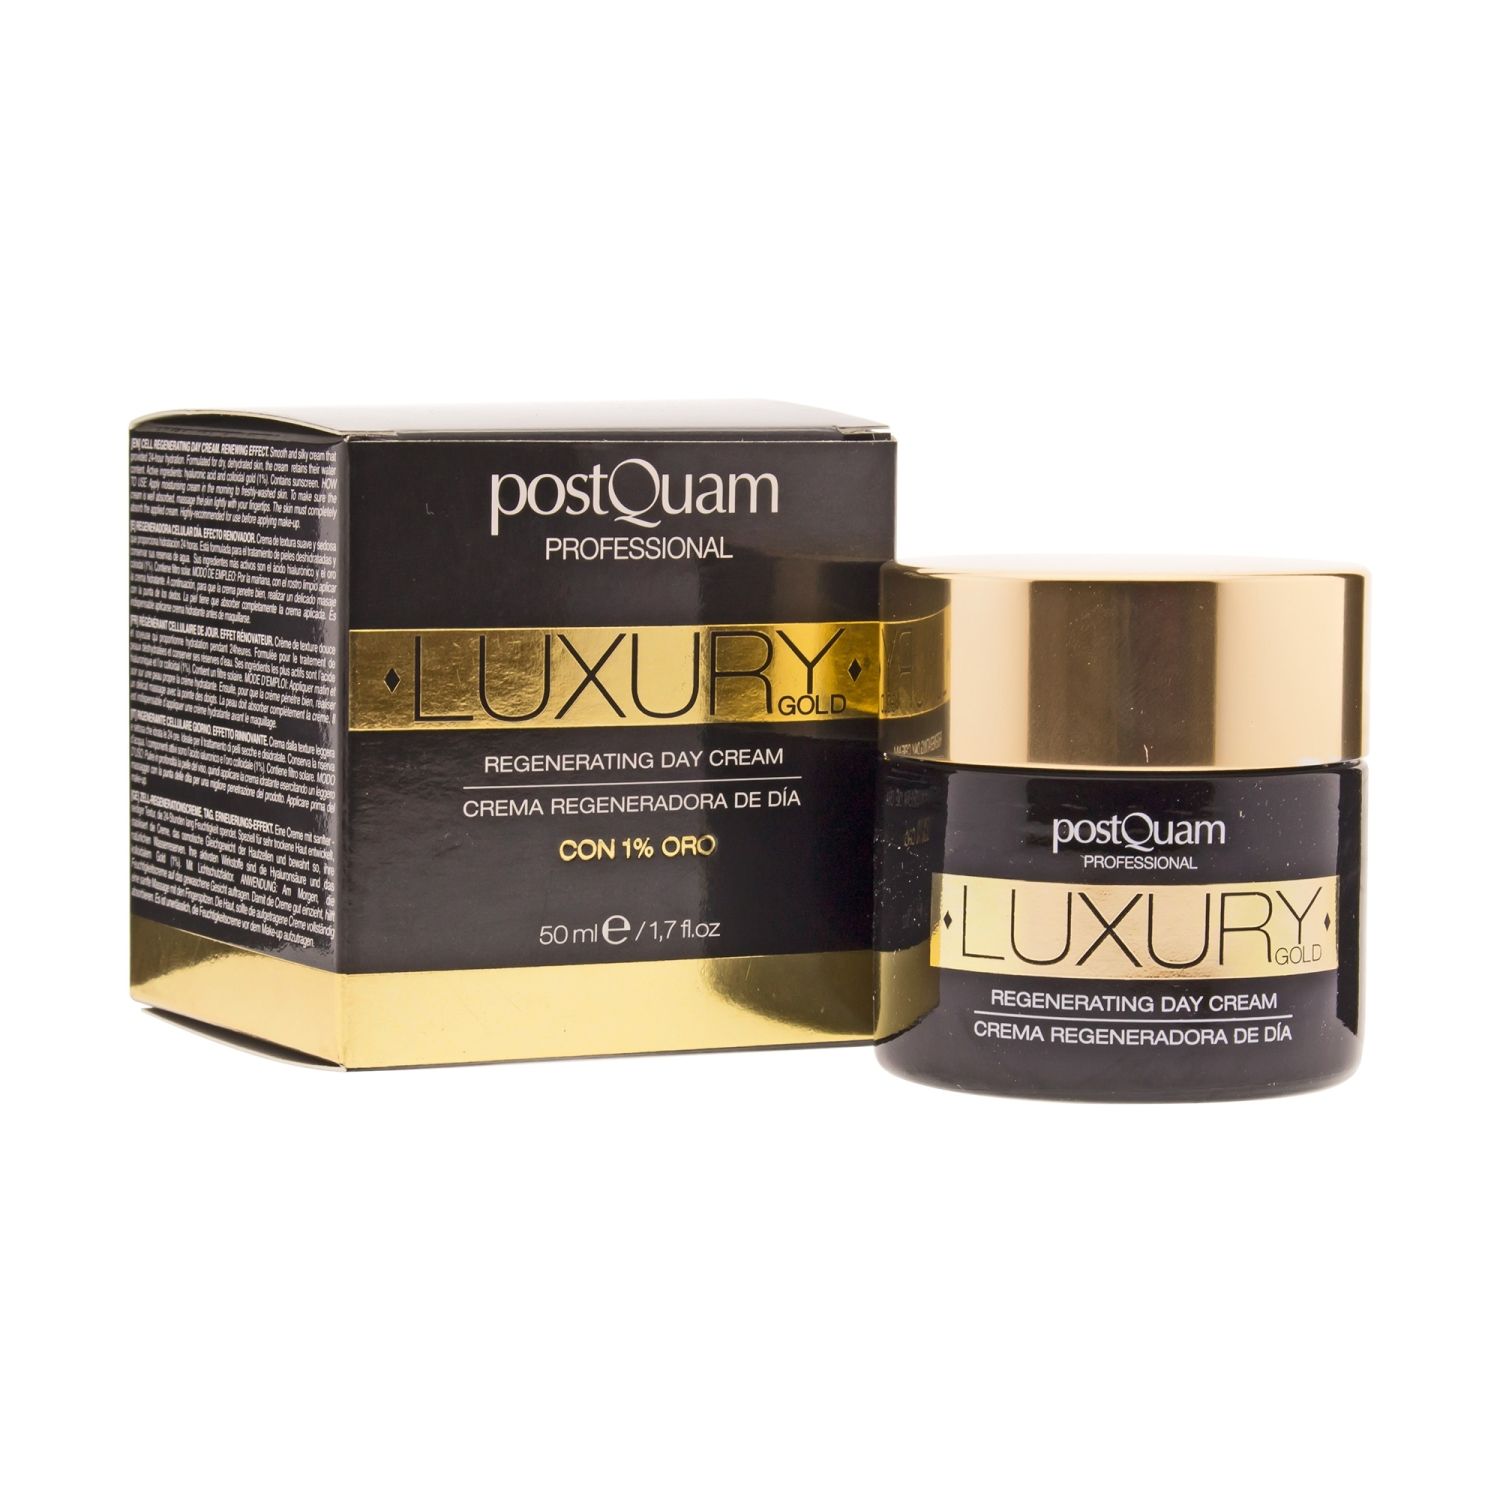 postquam luxury gold crema regeneradora de d a 50ml